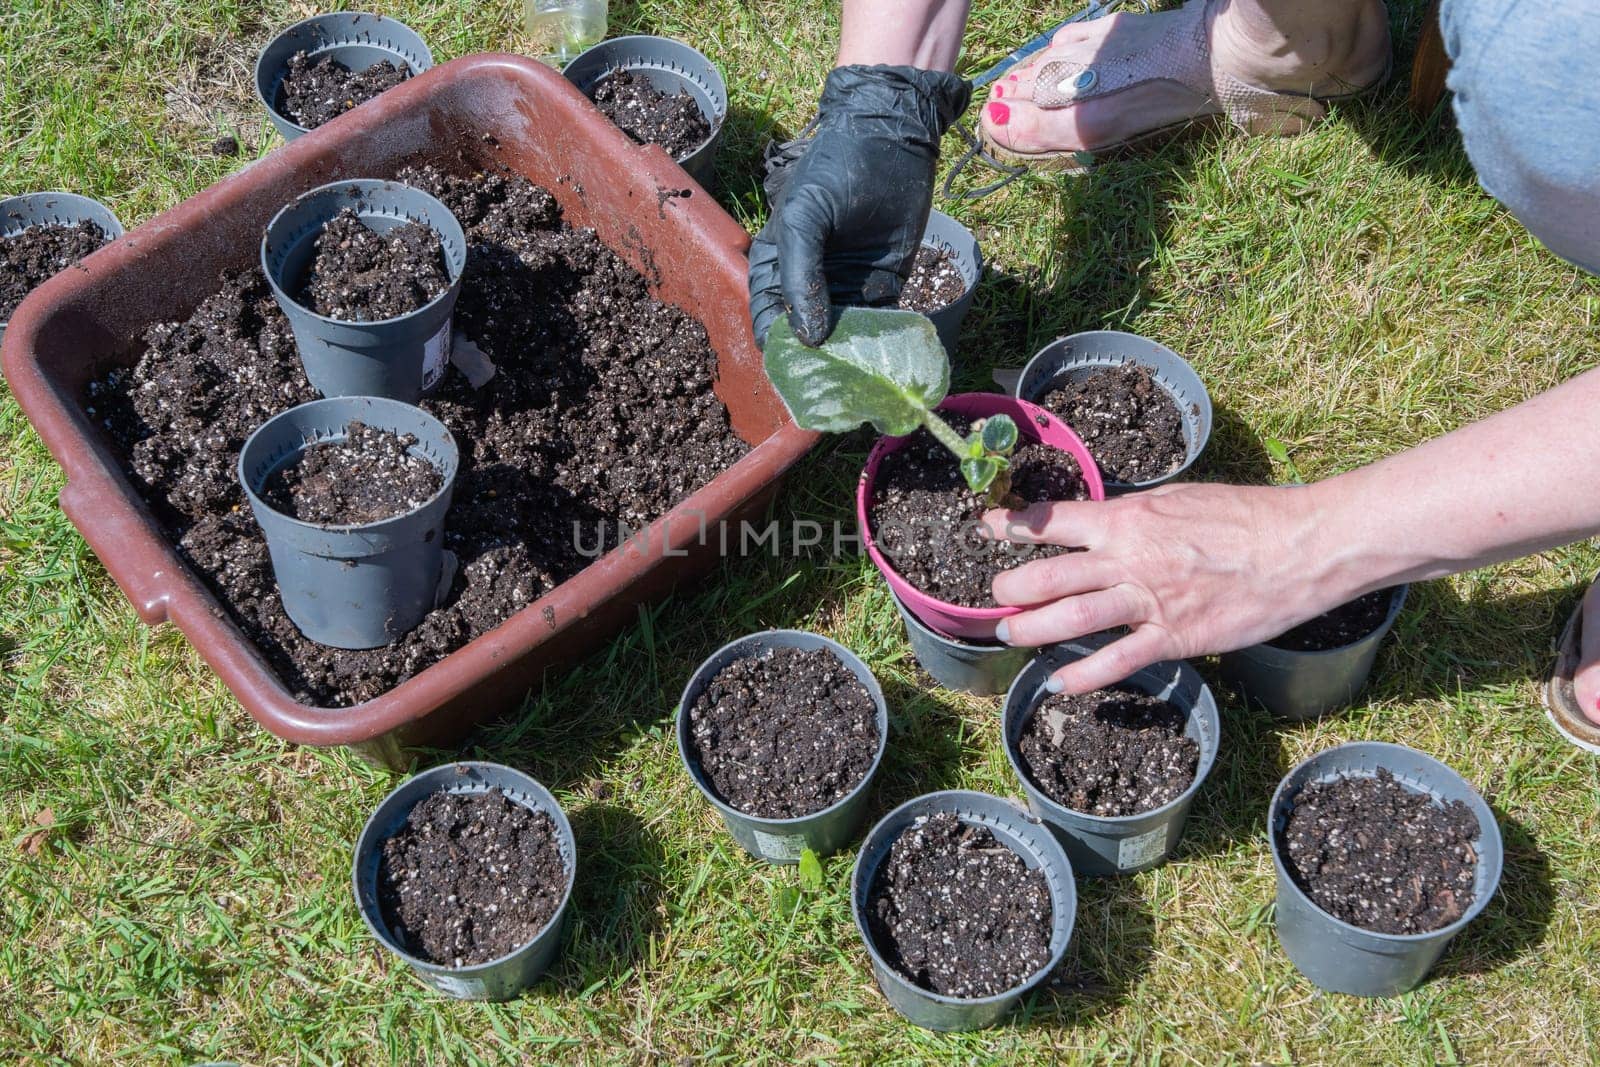 female hands in black gloves transplant a violet houseplant into new pots by KaterinaDalemans